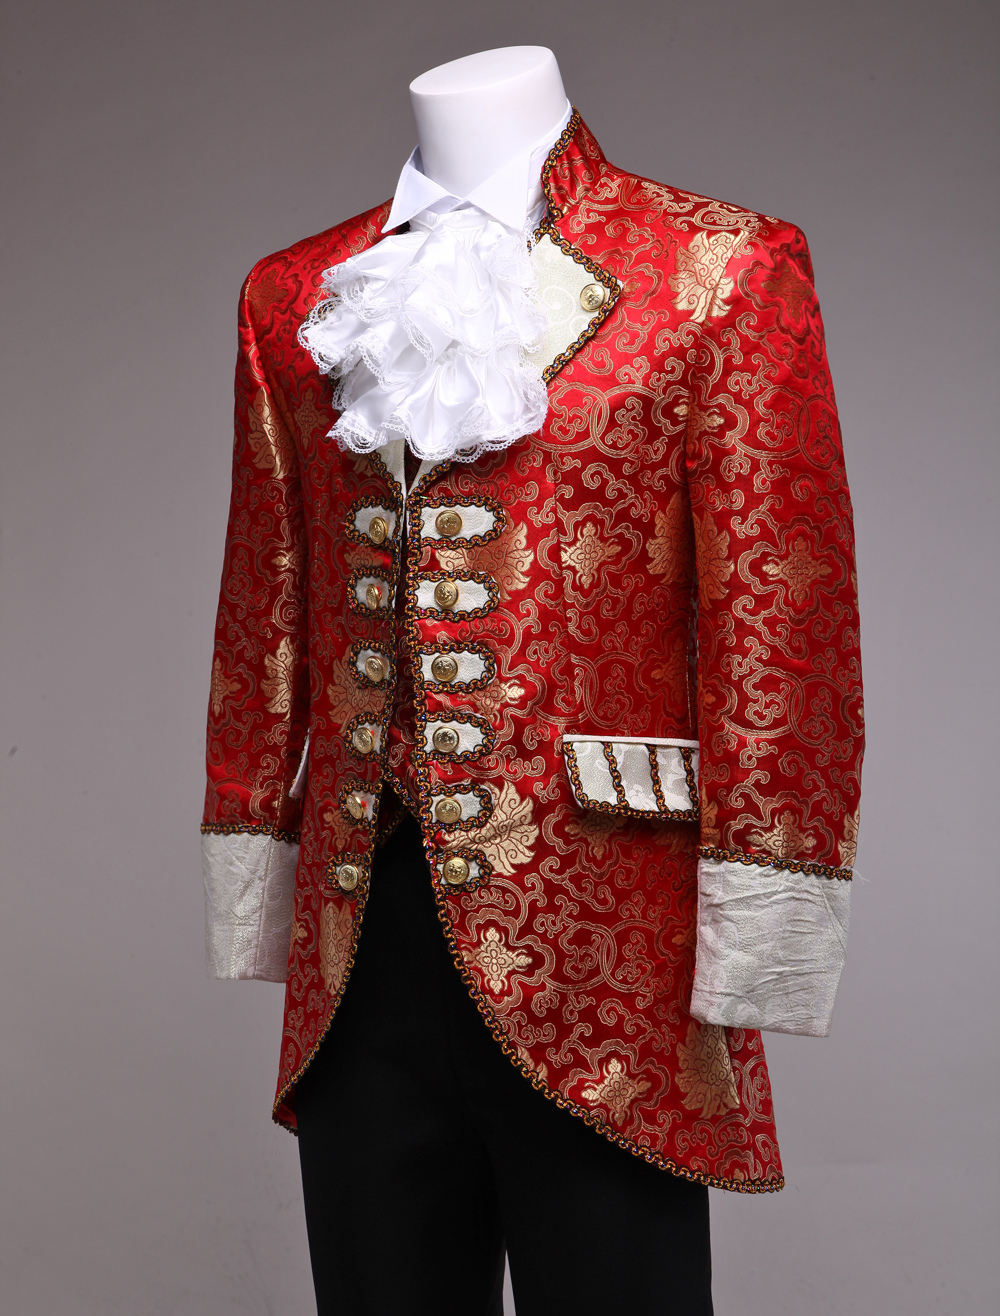 Retro Prince Costume Men's Red Jacquard European Vintage Royal Costume ...